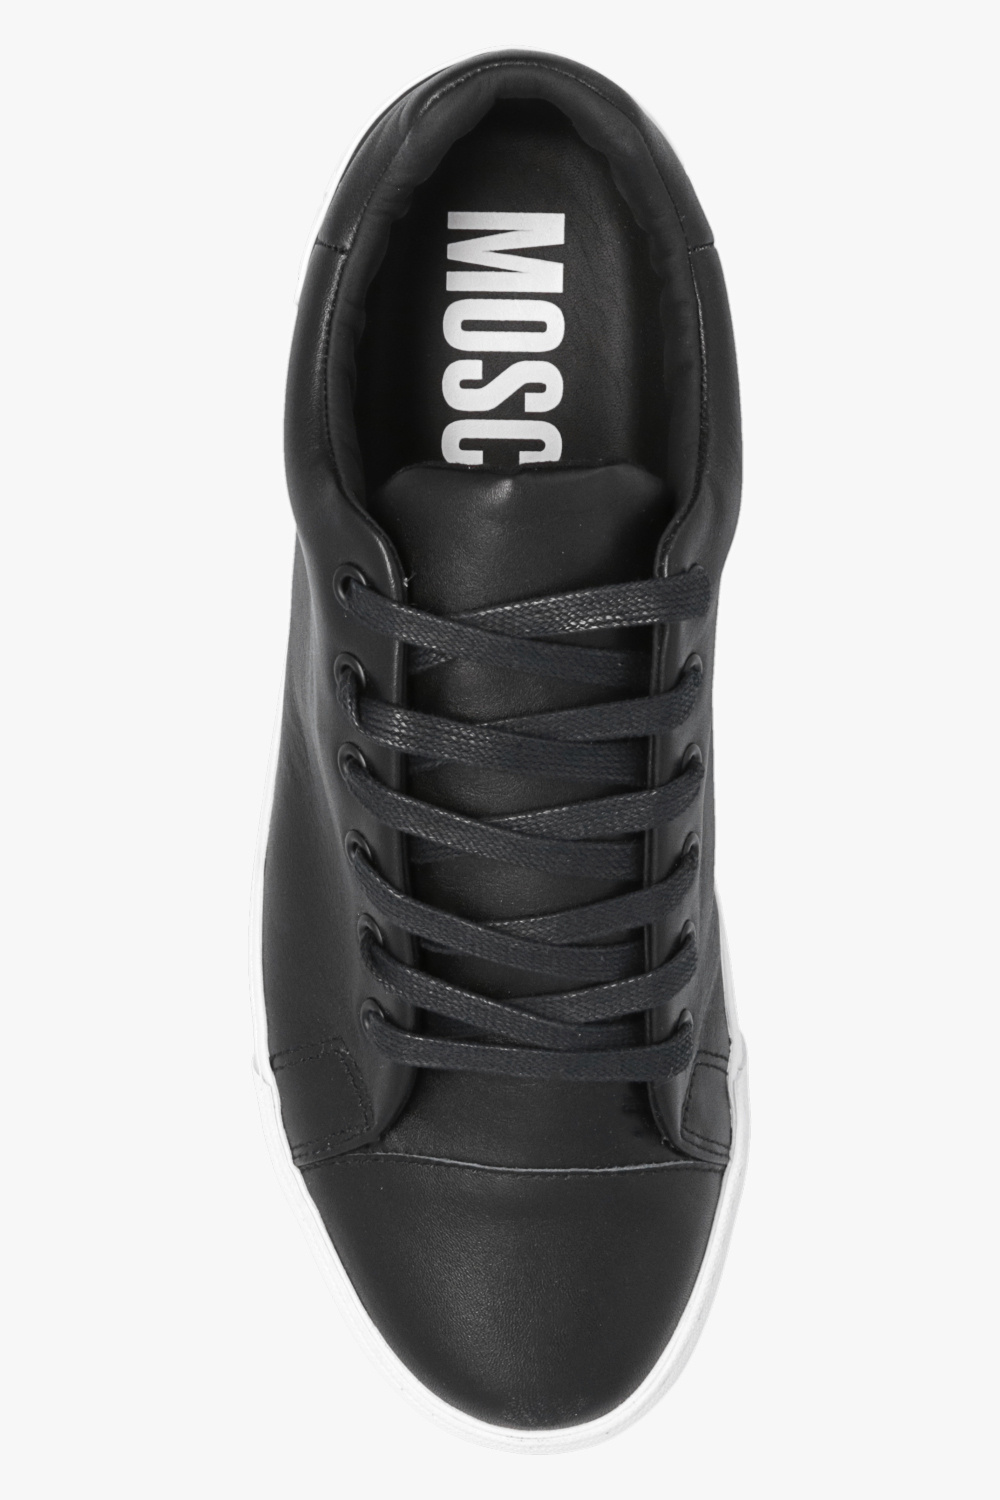 Moschino Sneakers LUMBERJACK Hilda SWA0312-002 Black CB001